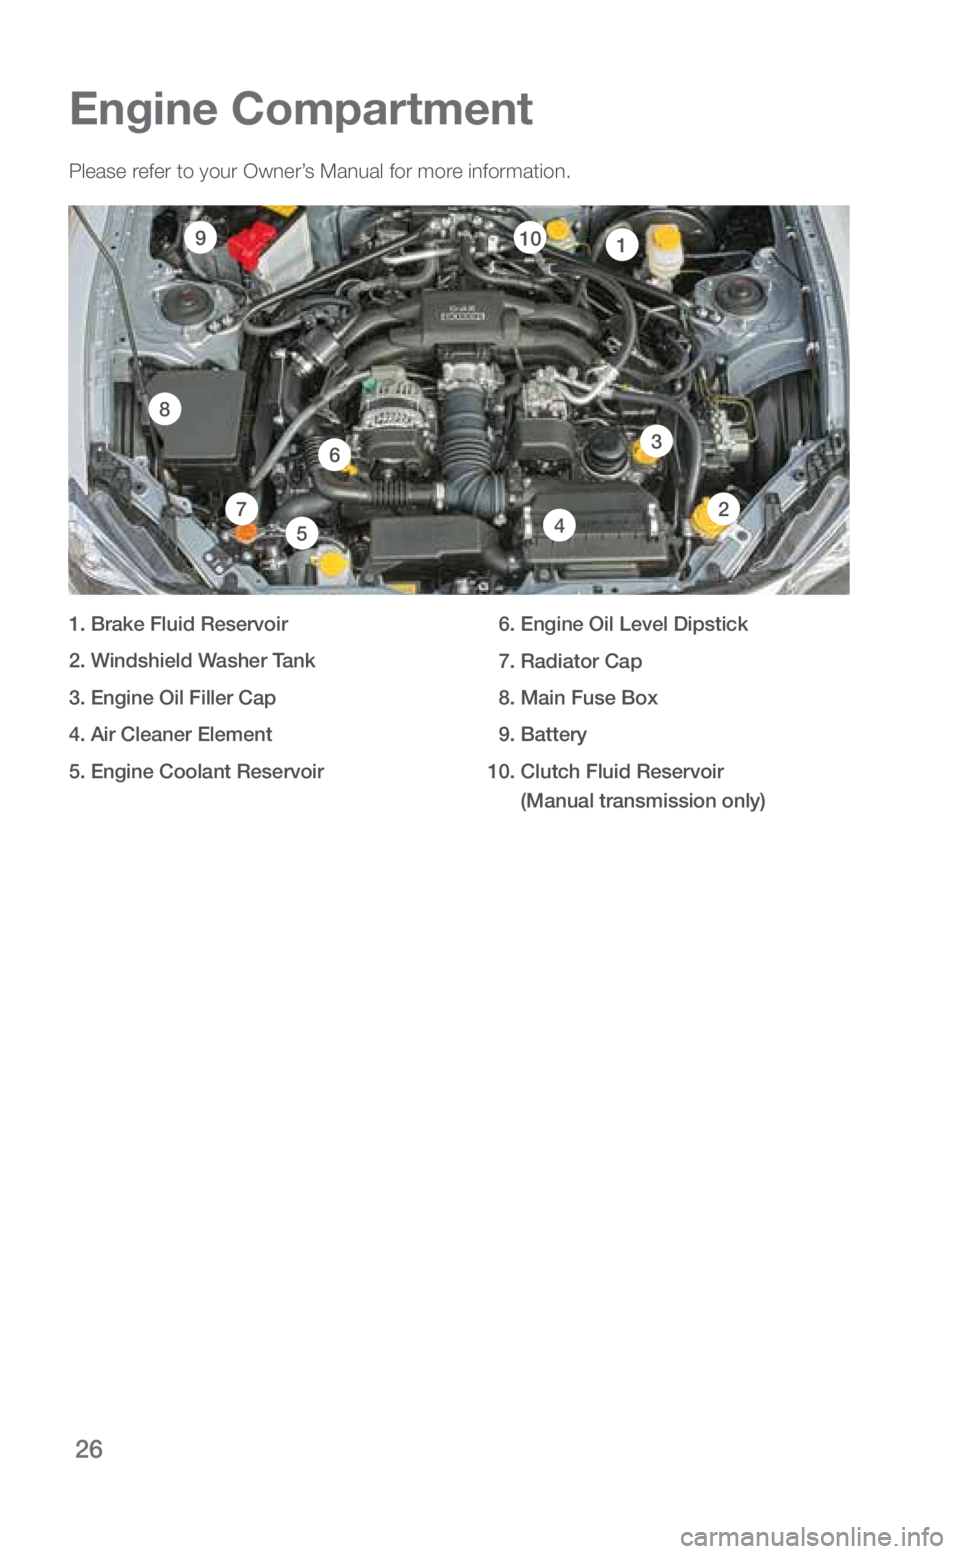 SUBARU BRZ 2019  Quick Guide 26
Please refer to your Owner’s Manual for more information. 
1. Brake Fluid Reservoir
2. Windshield Washer Tank
3. Engine Oil Filler Cap
4. Air Cleaner Element
5. Engine Coolant Reservoir   6. Engi